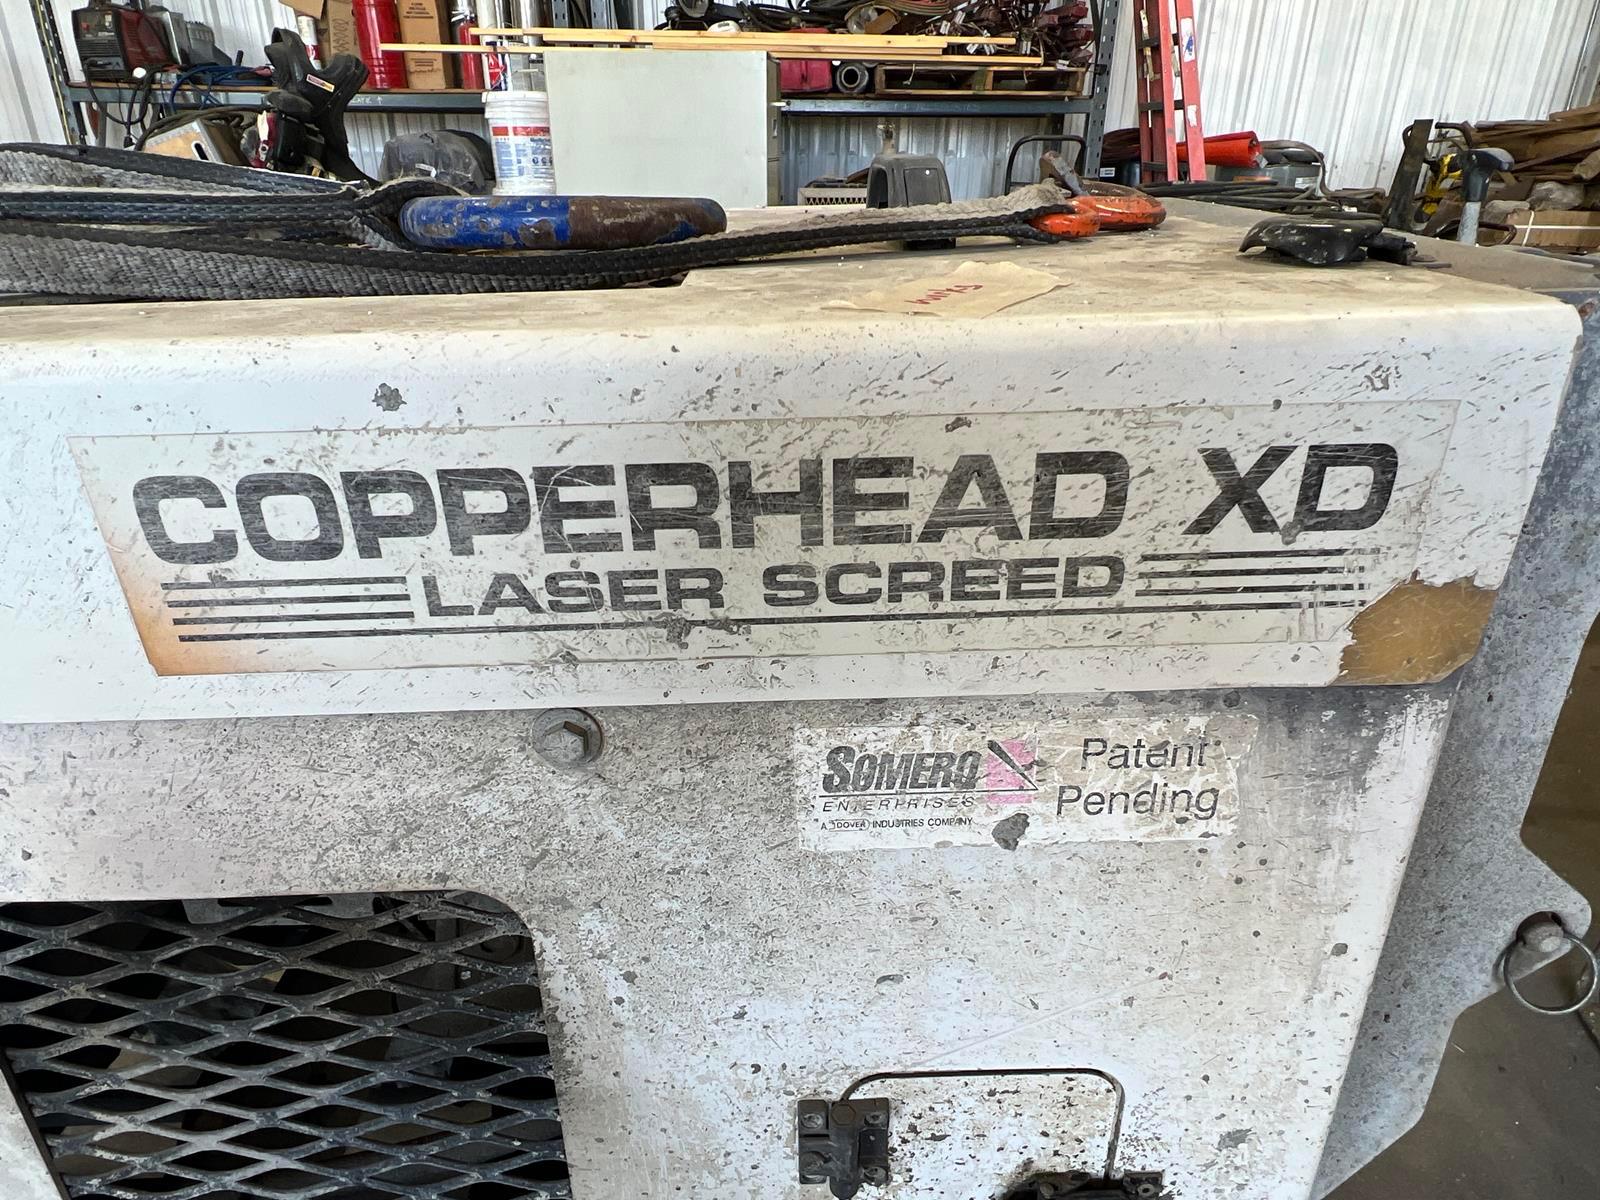 Copper Head Xd Laser Screed